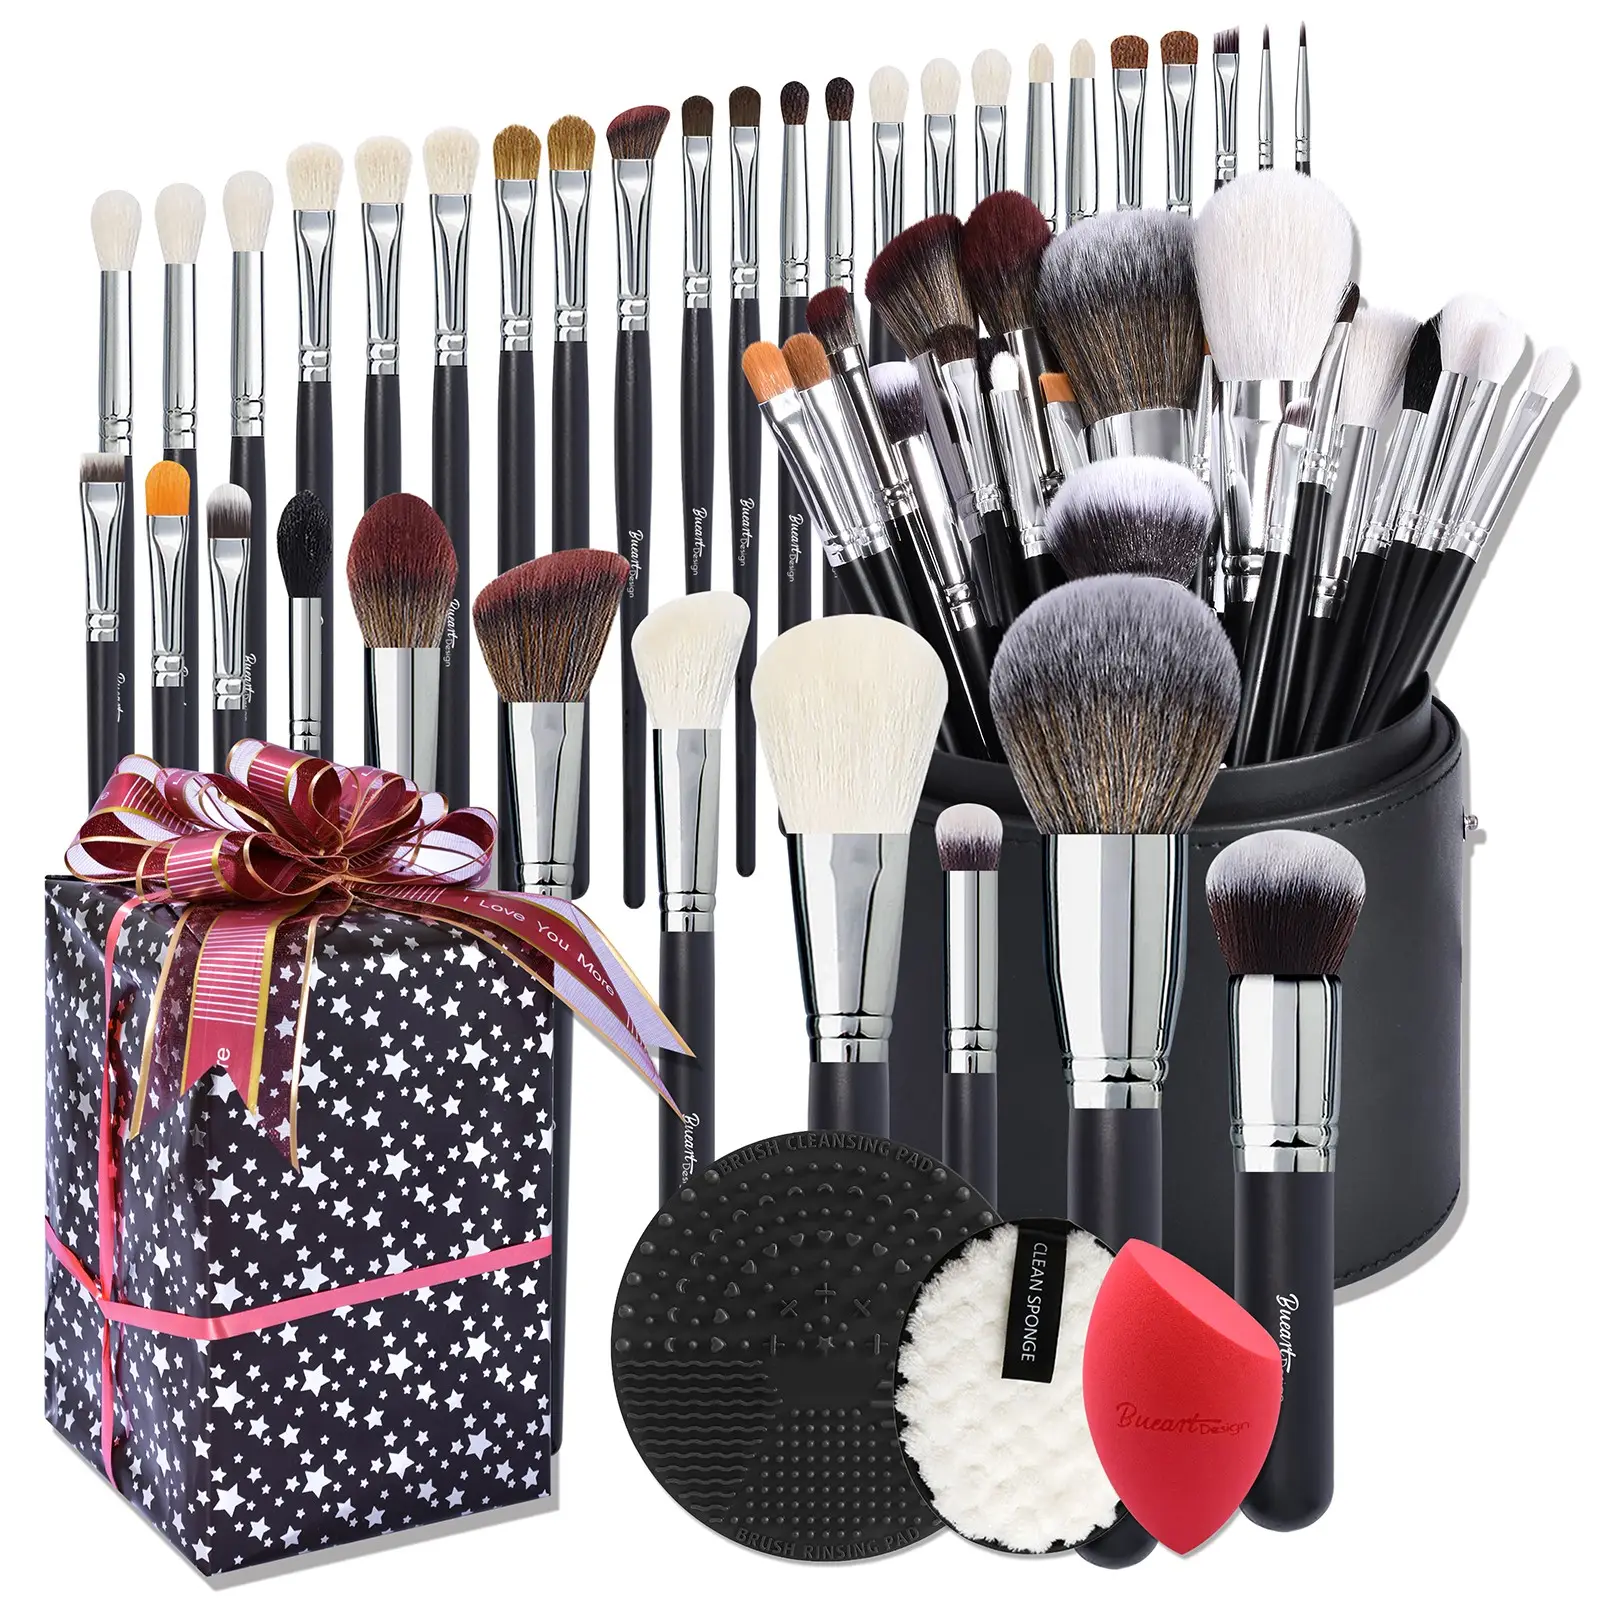 BUEYA Make up Brushes, Cruelty 24pcs Premium Cosmetic Makeup Brush Set for Foundation Blending Blush Concealer Eye Shadow,